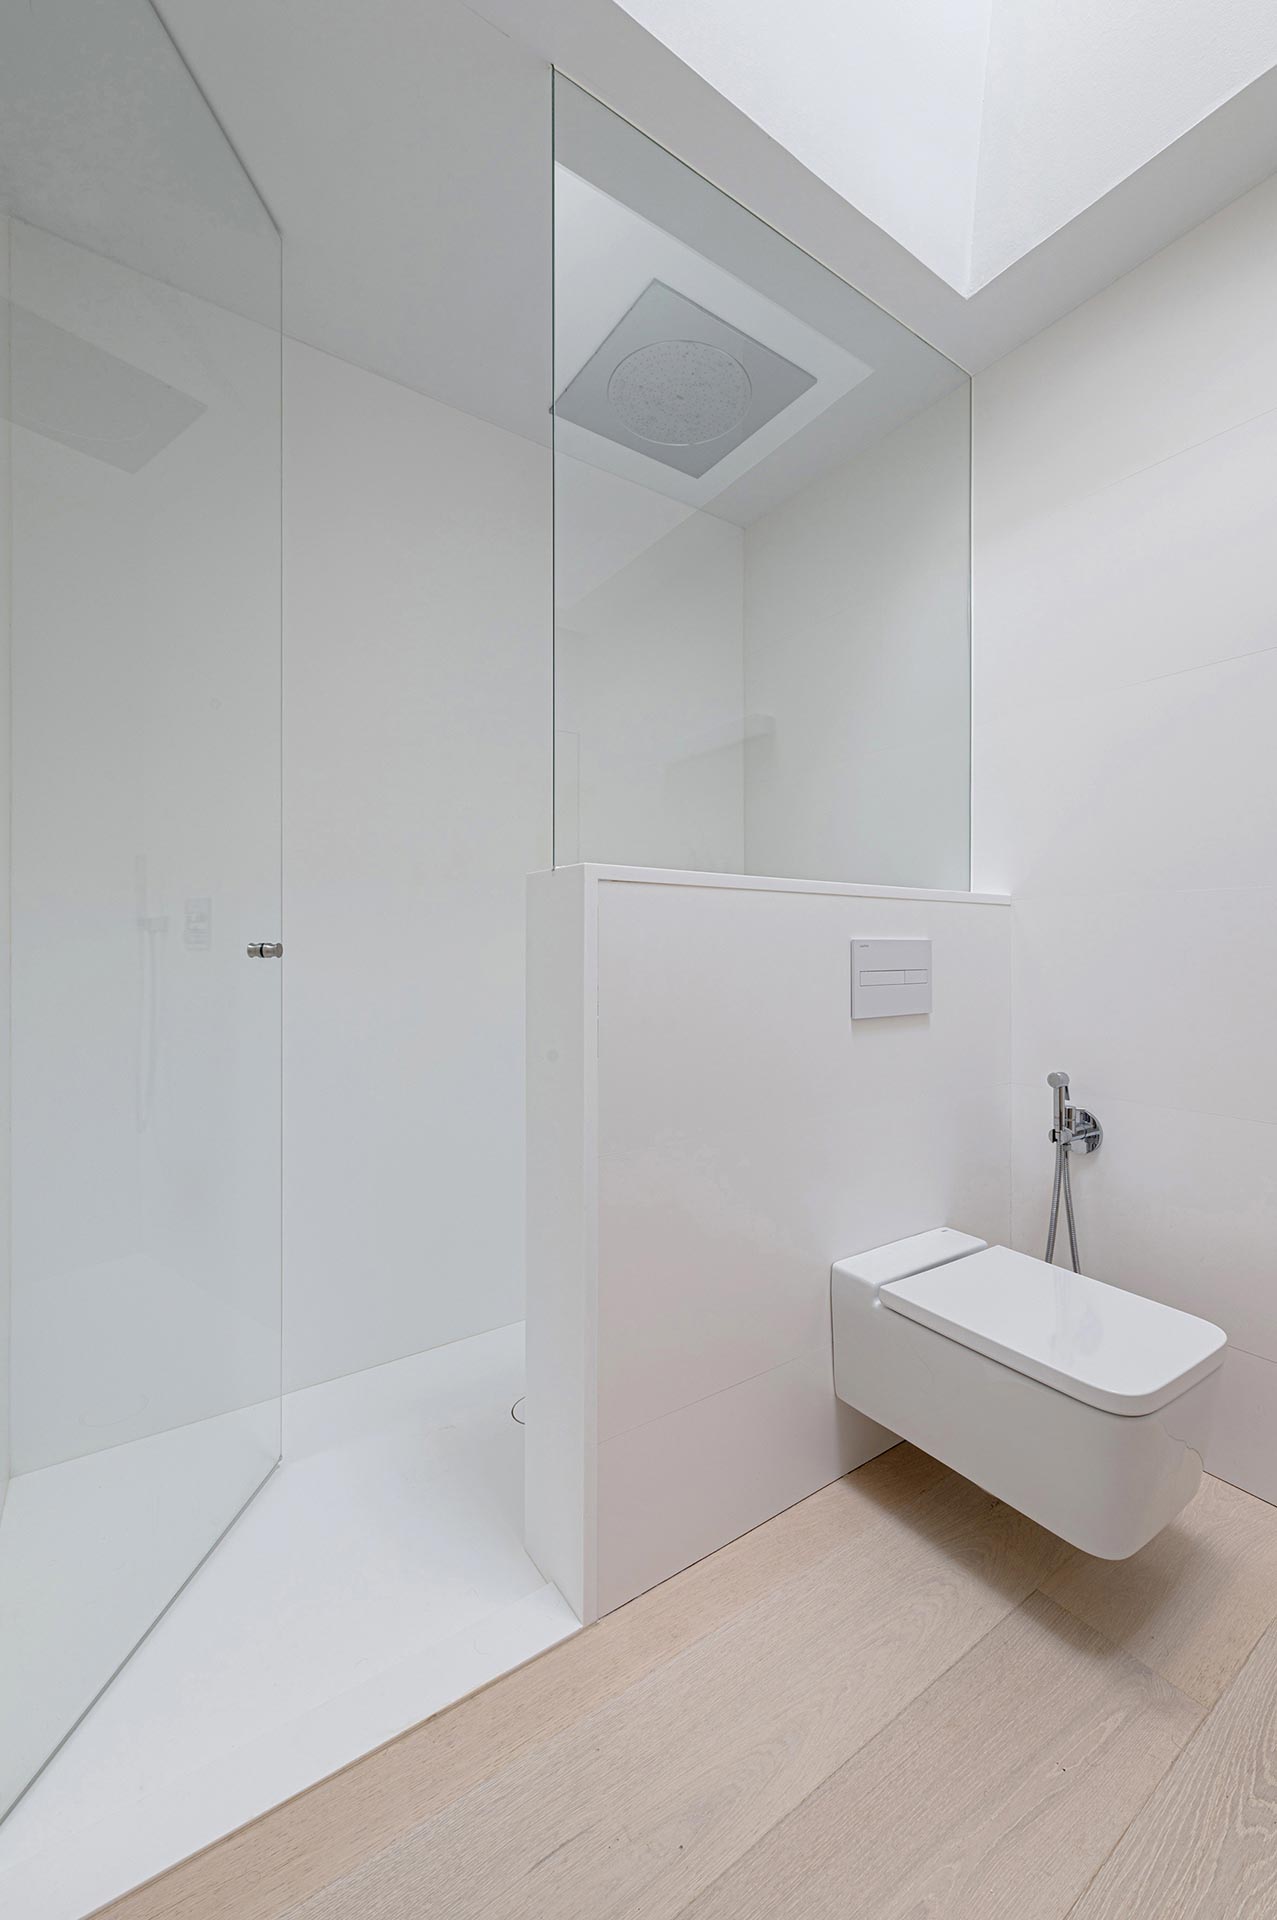 Baño en gres porcelánico blanco en casa moderna diseñada por Moah Arquitectos en Cantabria